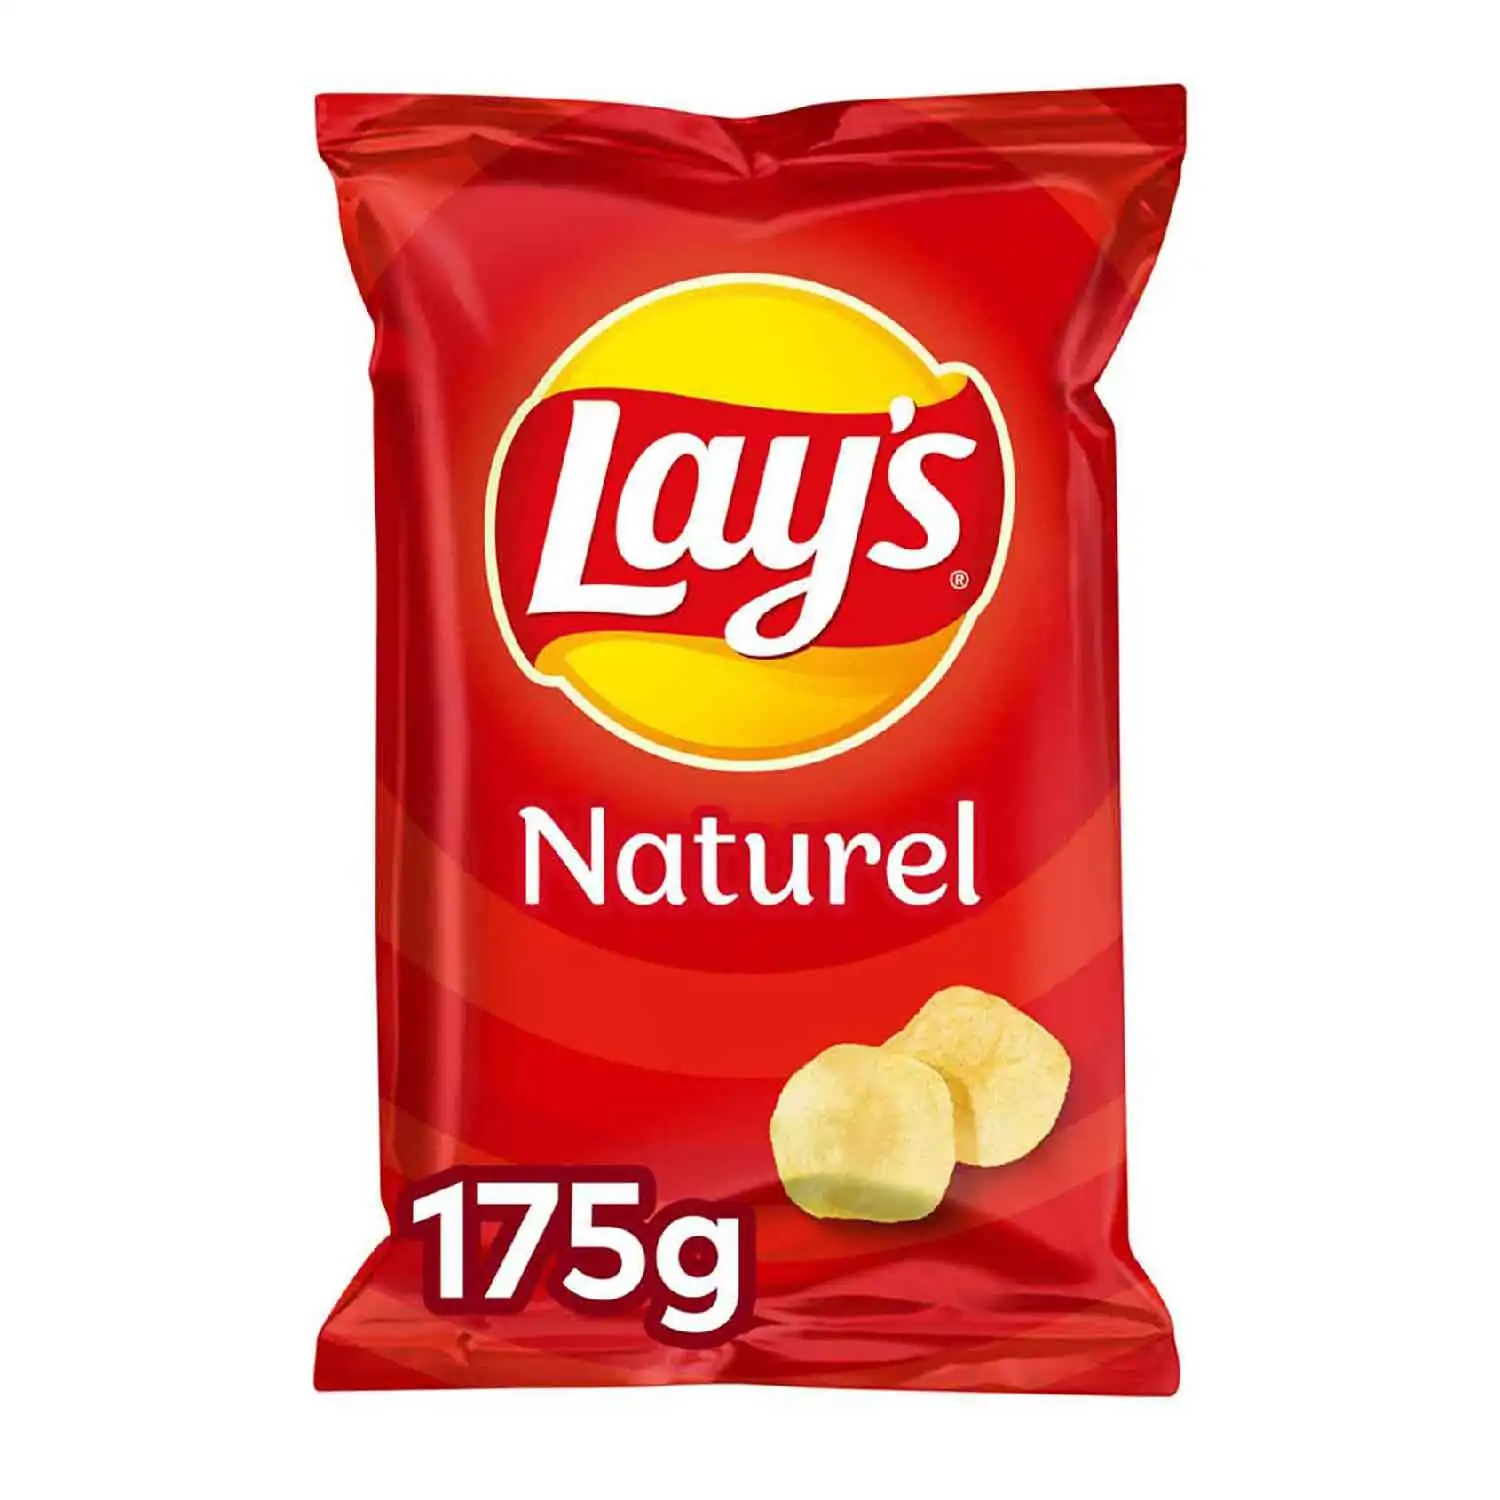 Lay's naturel 175g